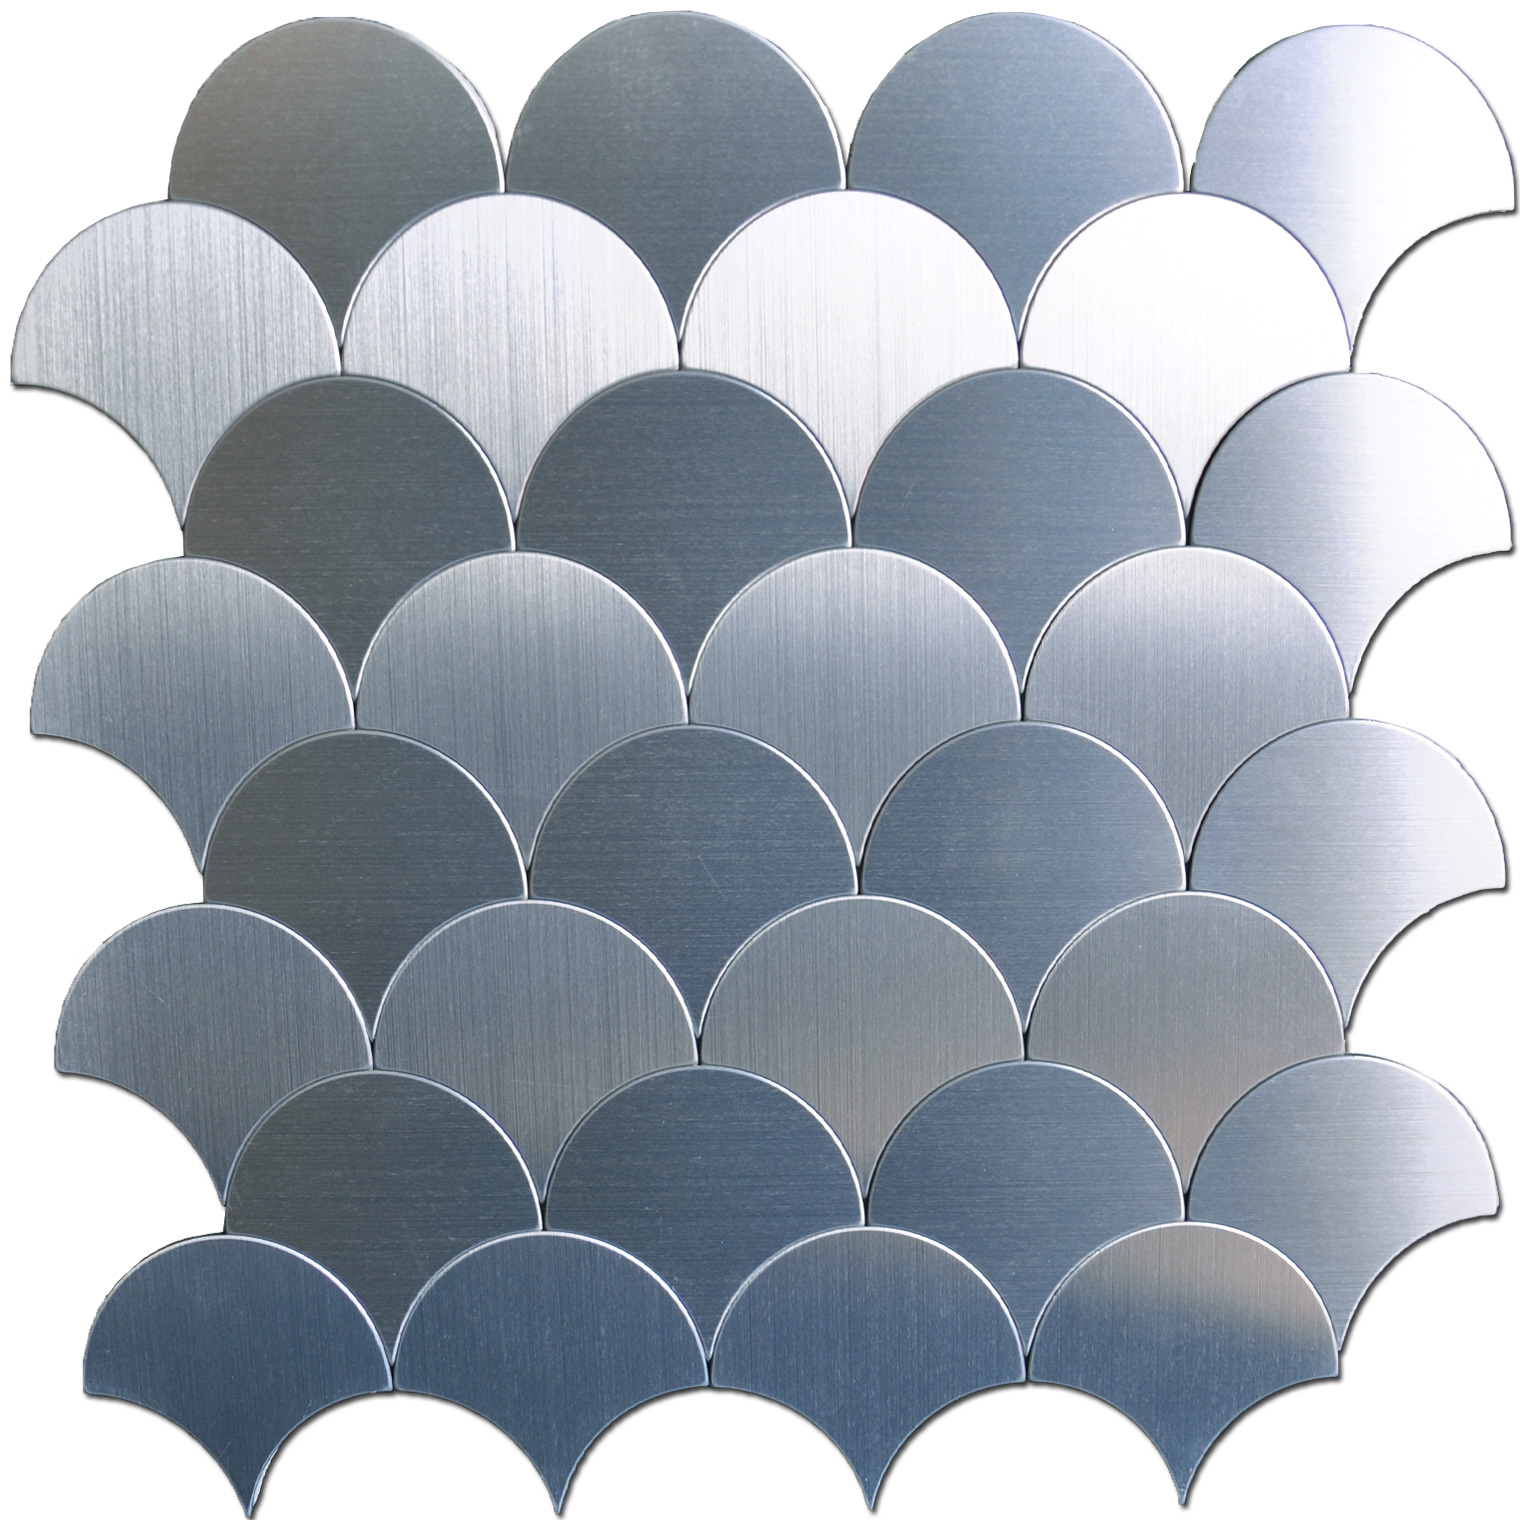 A16071 - Peel and Stick Tile Metal Backsplash, Silver Umbrella